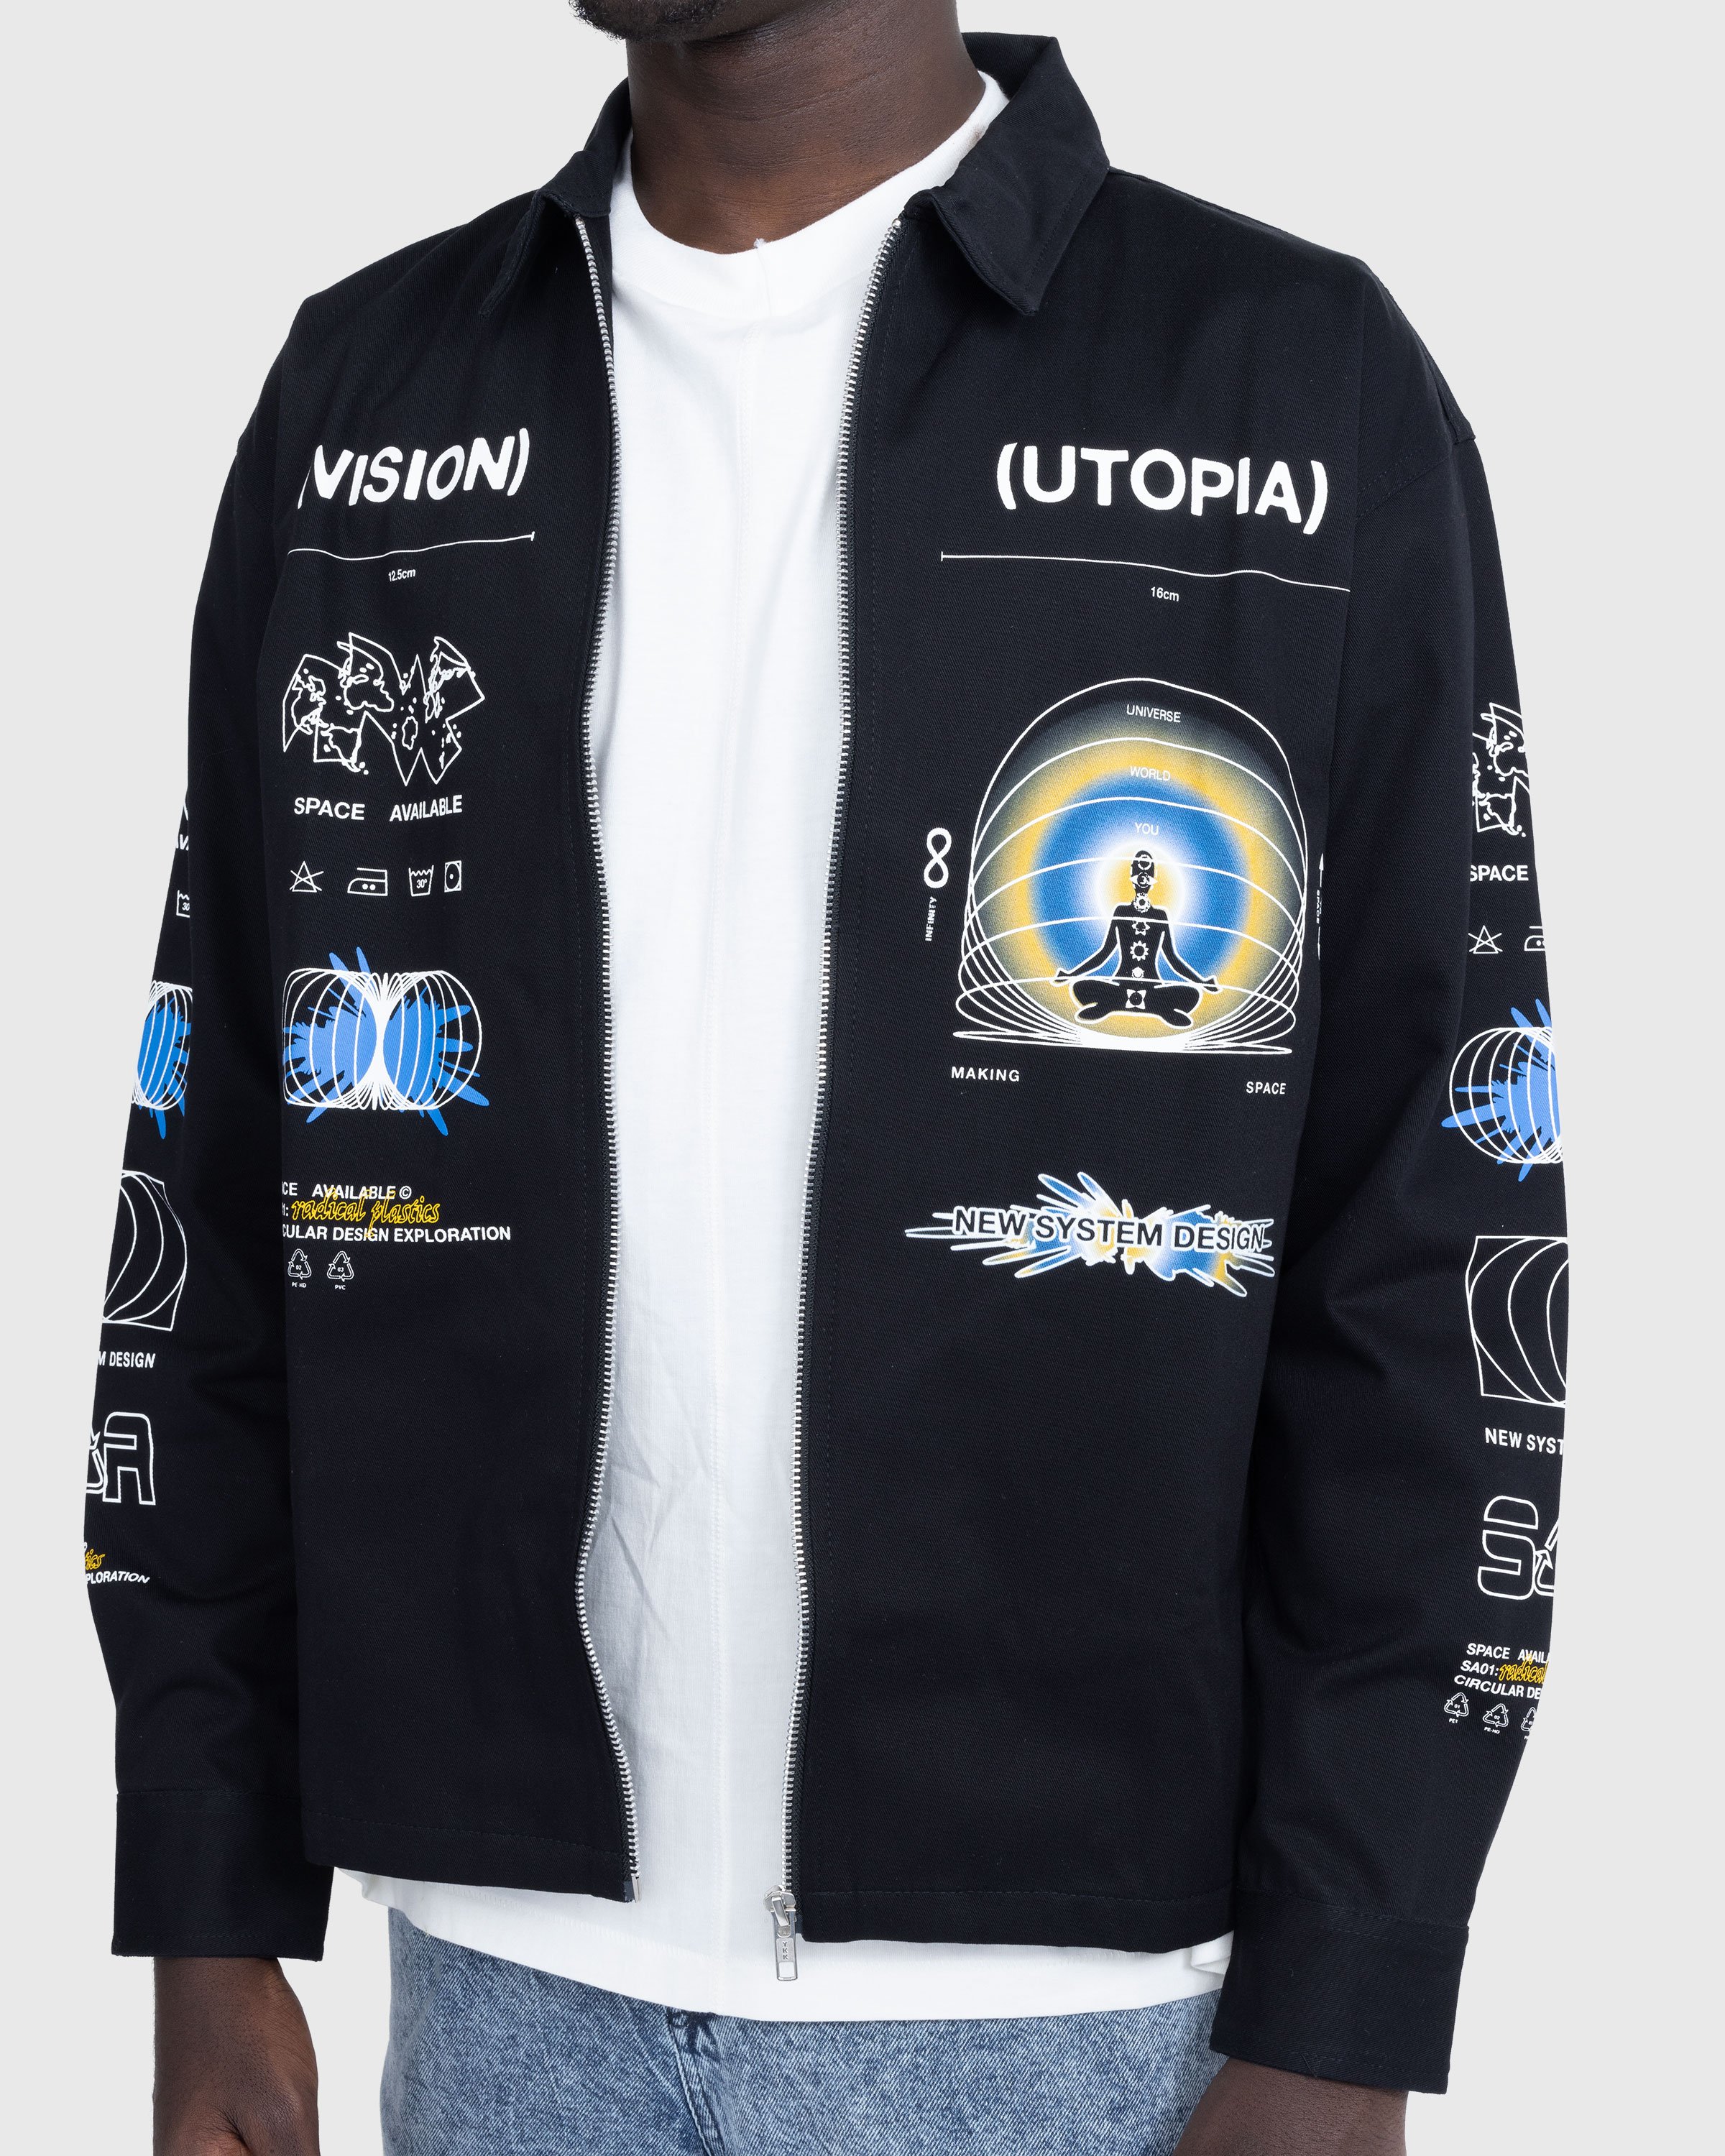 Space Available Studio - Utopia Work Jacket Black - Clothing - Black - Image 5